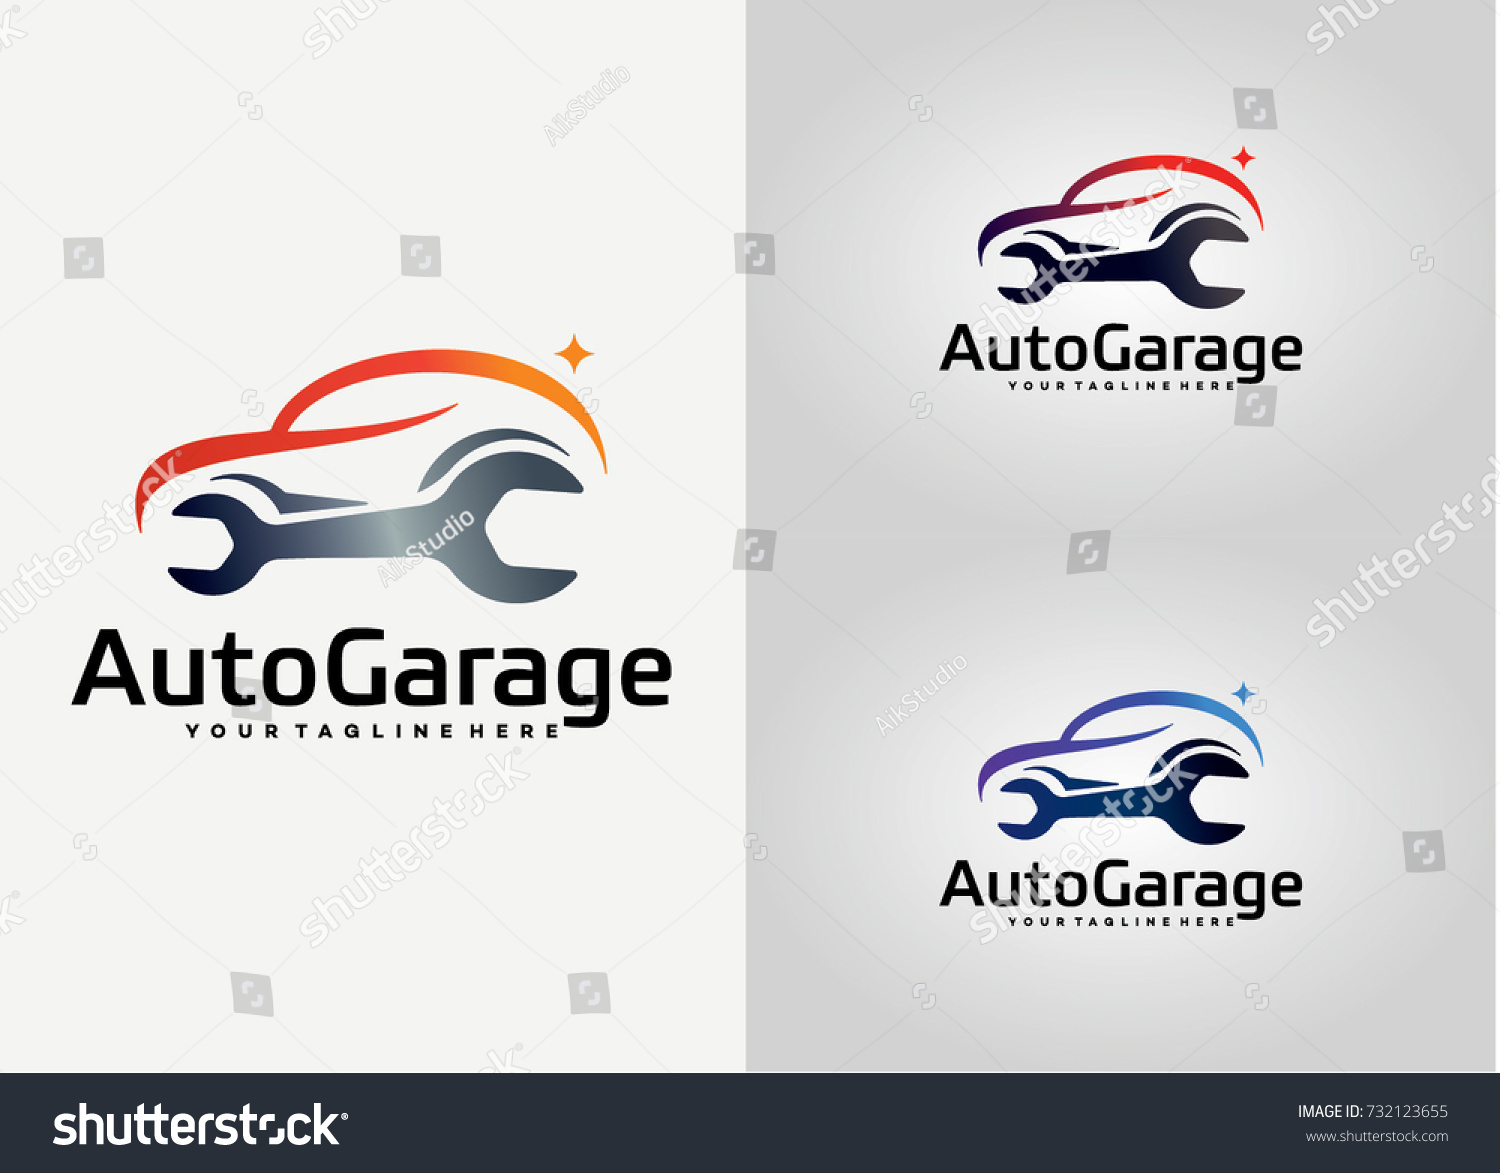 Creative Garage Logo Design